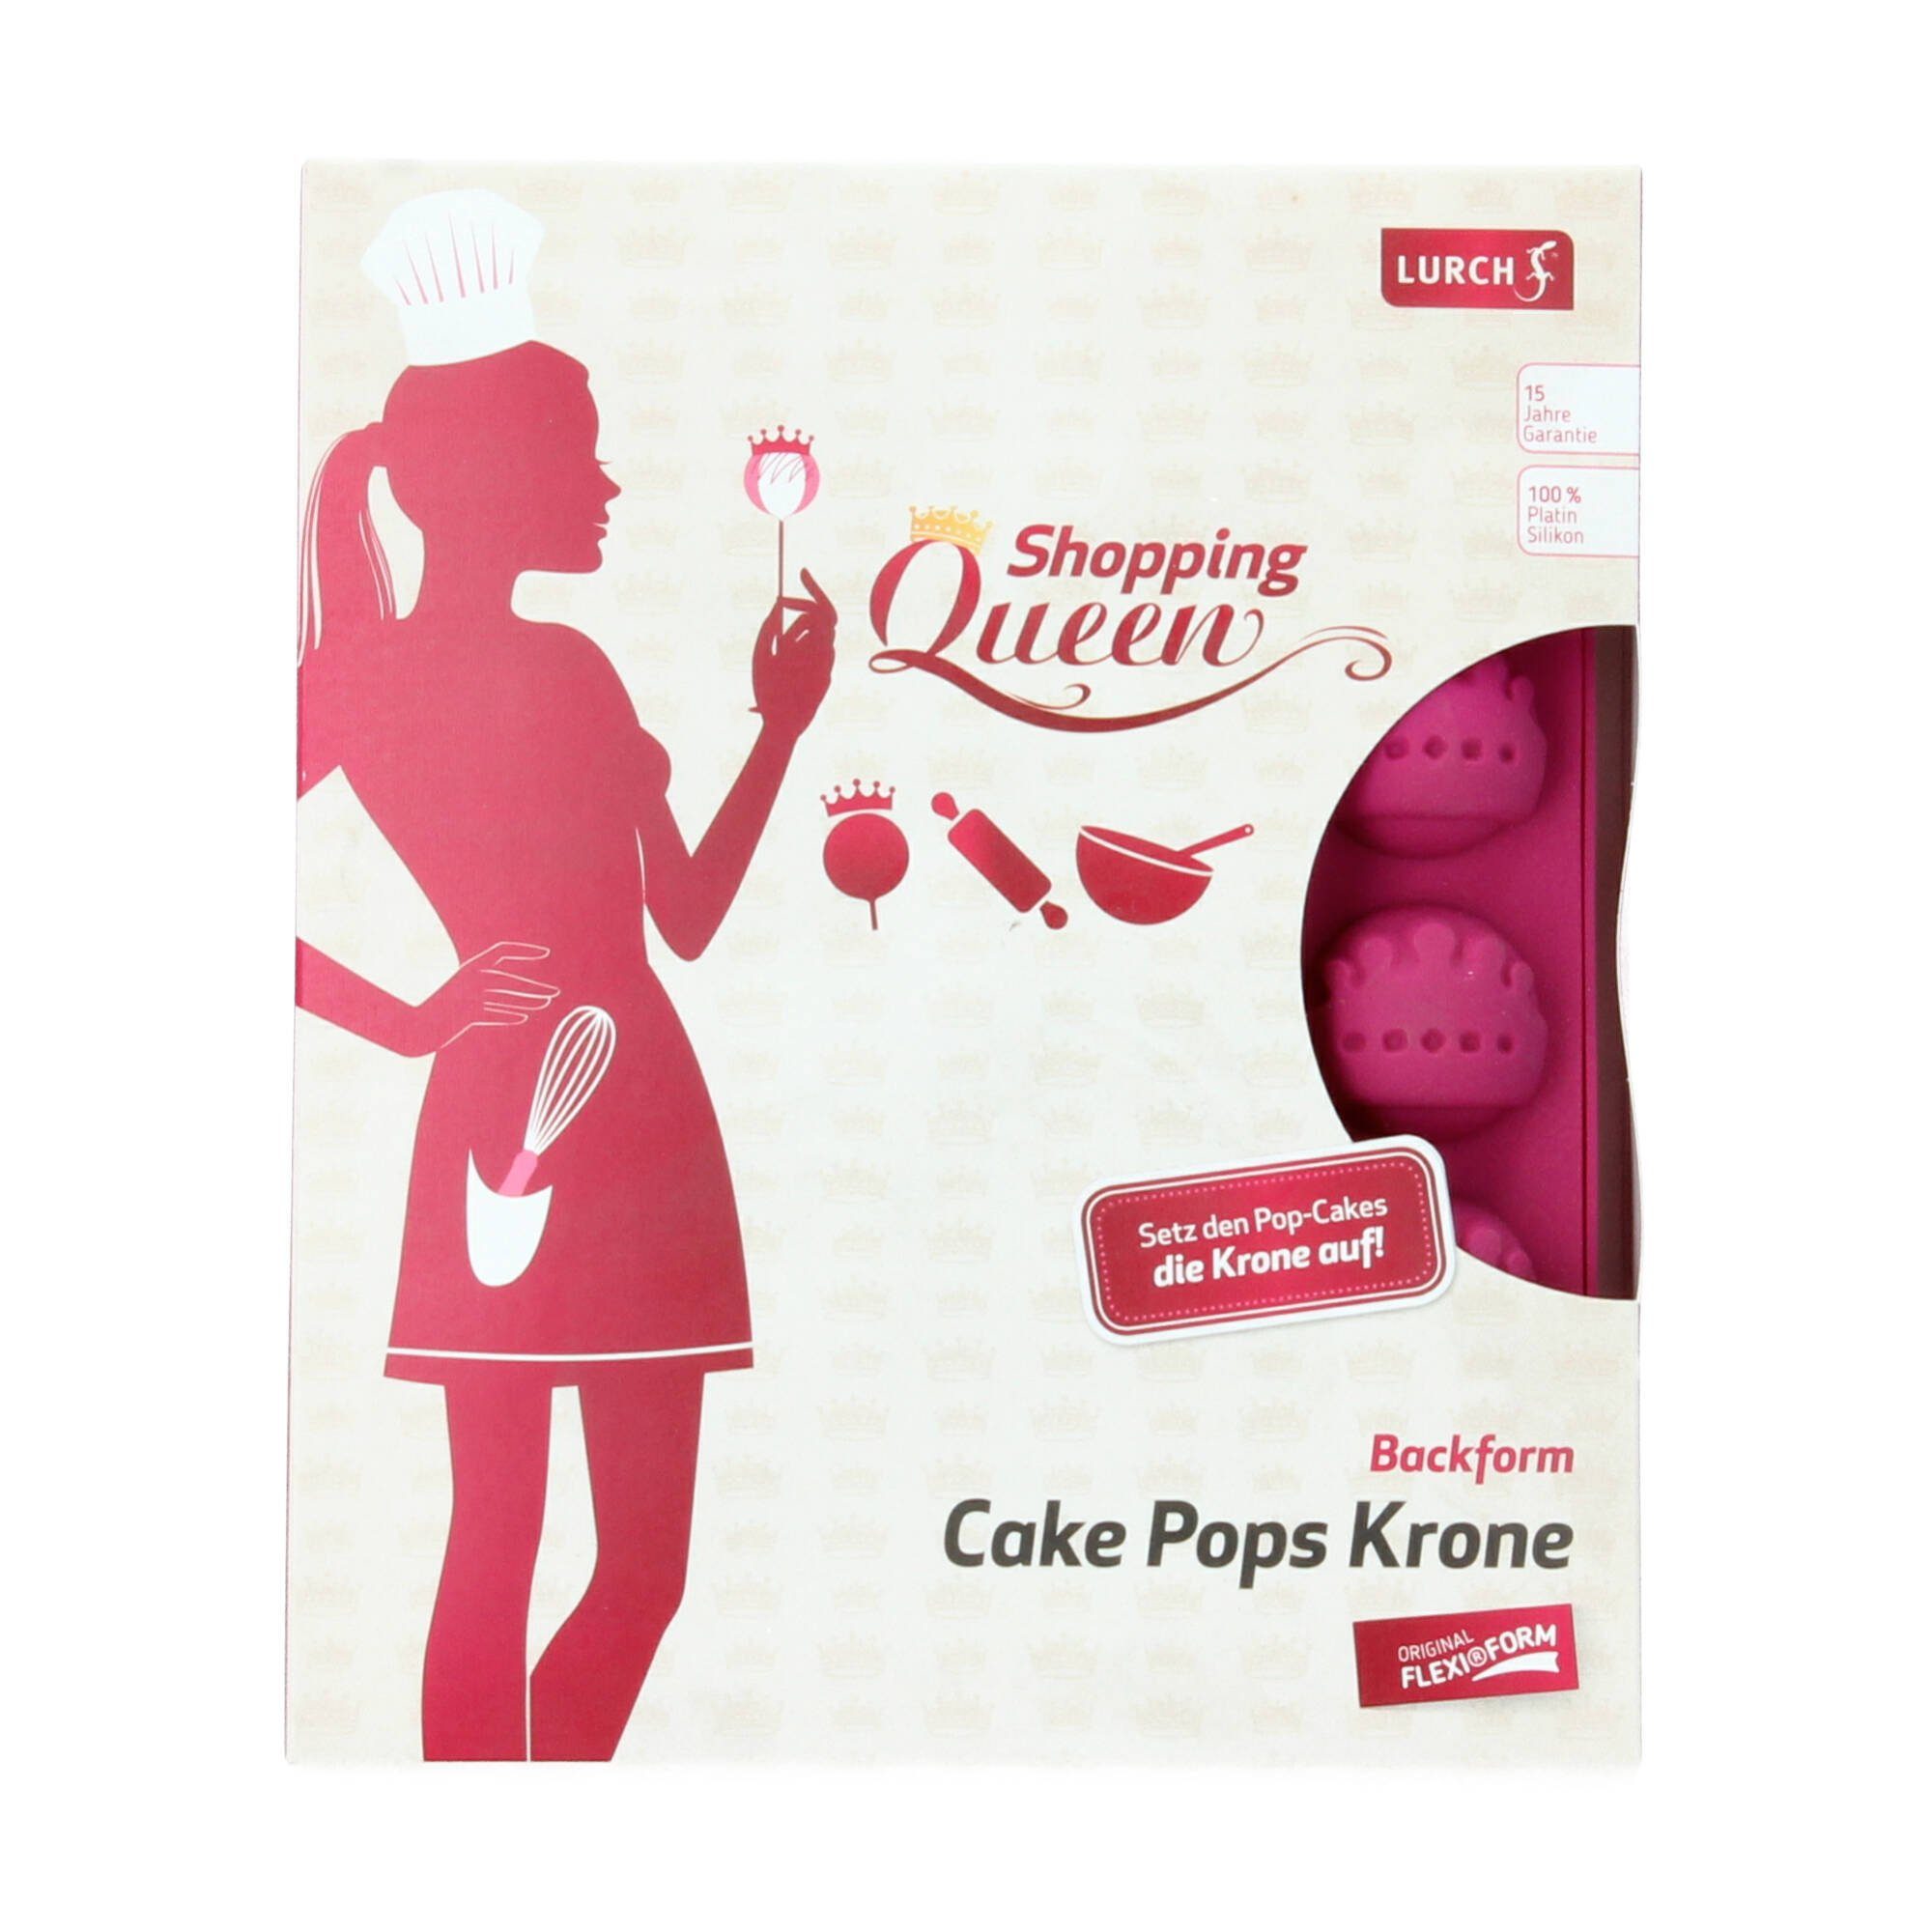 Krone Queen Backform Lurch Pops Shopping Cake pink